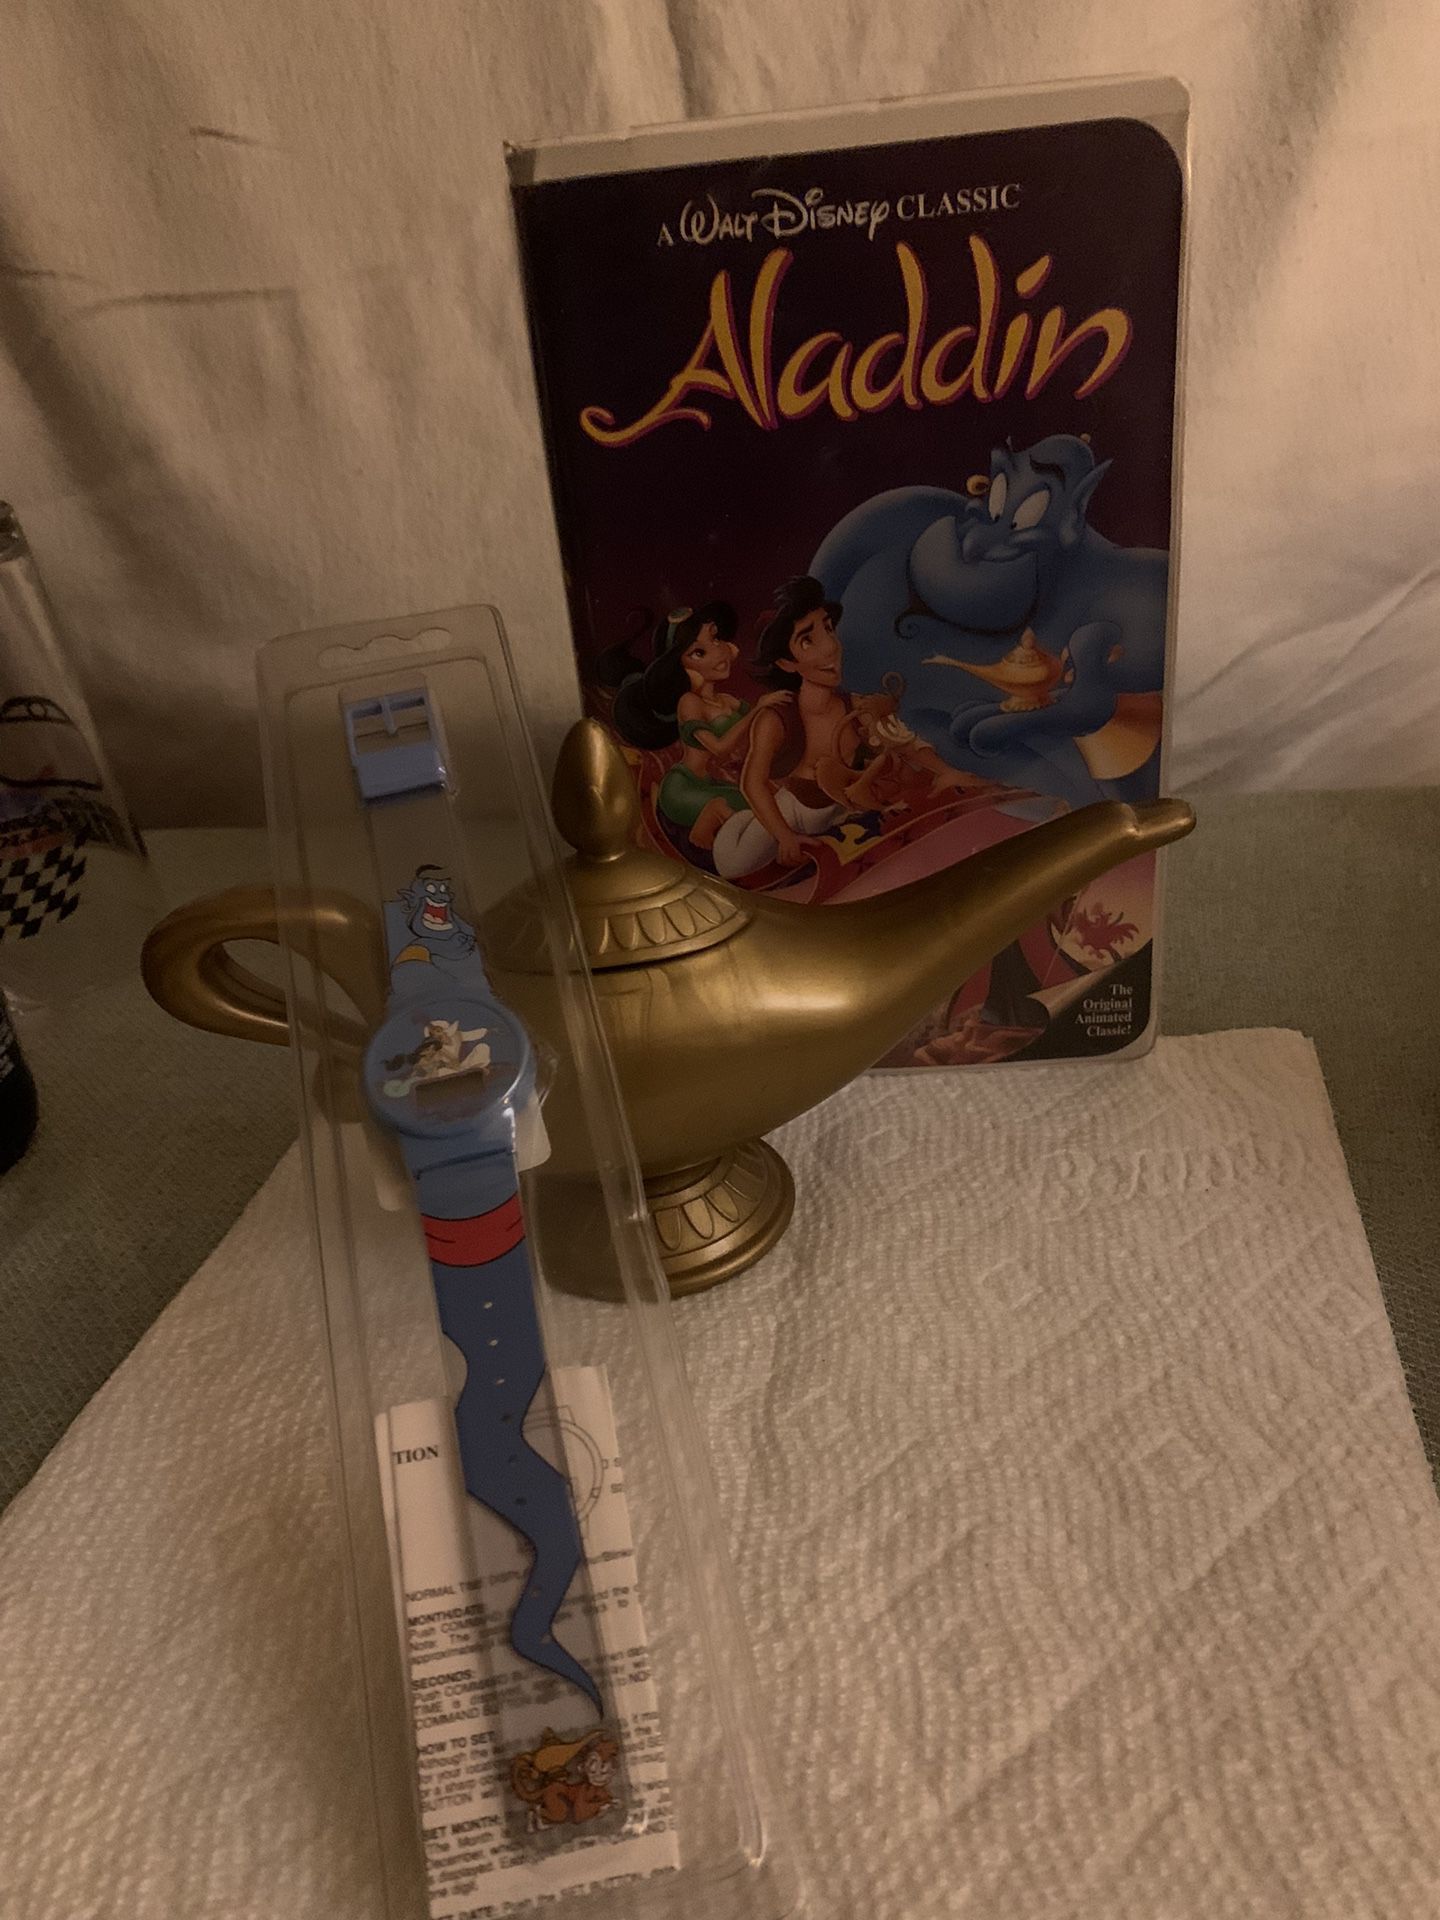 Aladdin Disney VHS Movie, Watch, & Lamp 